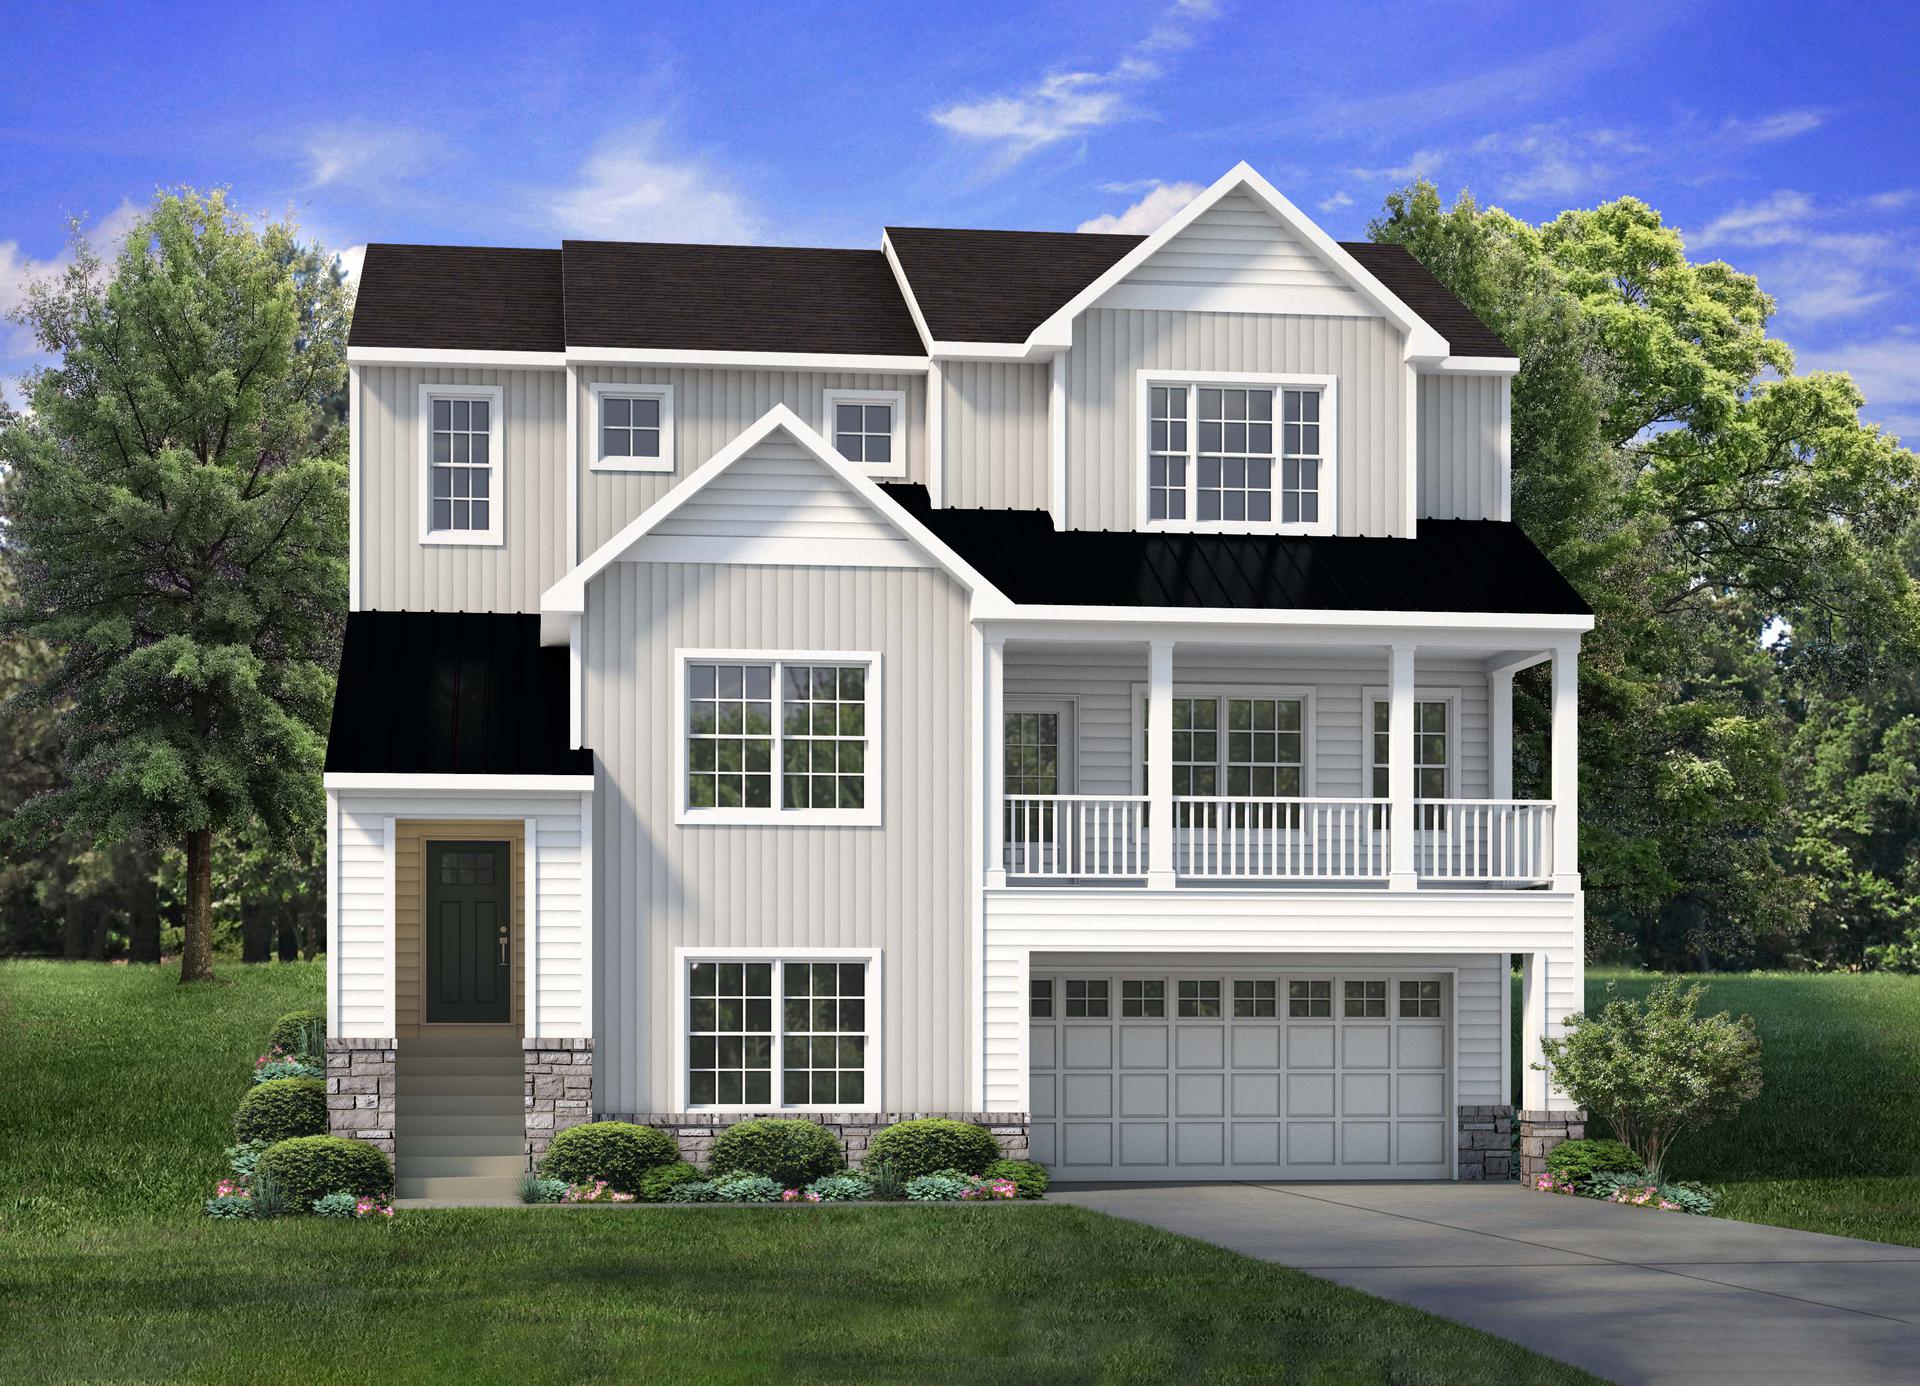 Schnecksville PA New Home for Sale